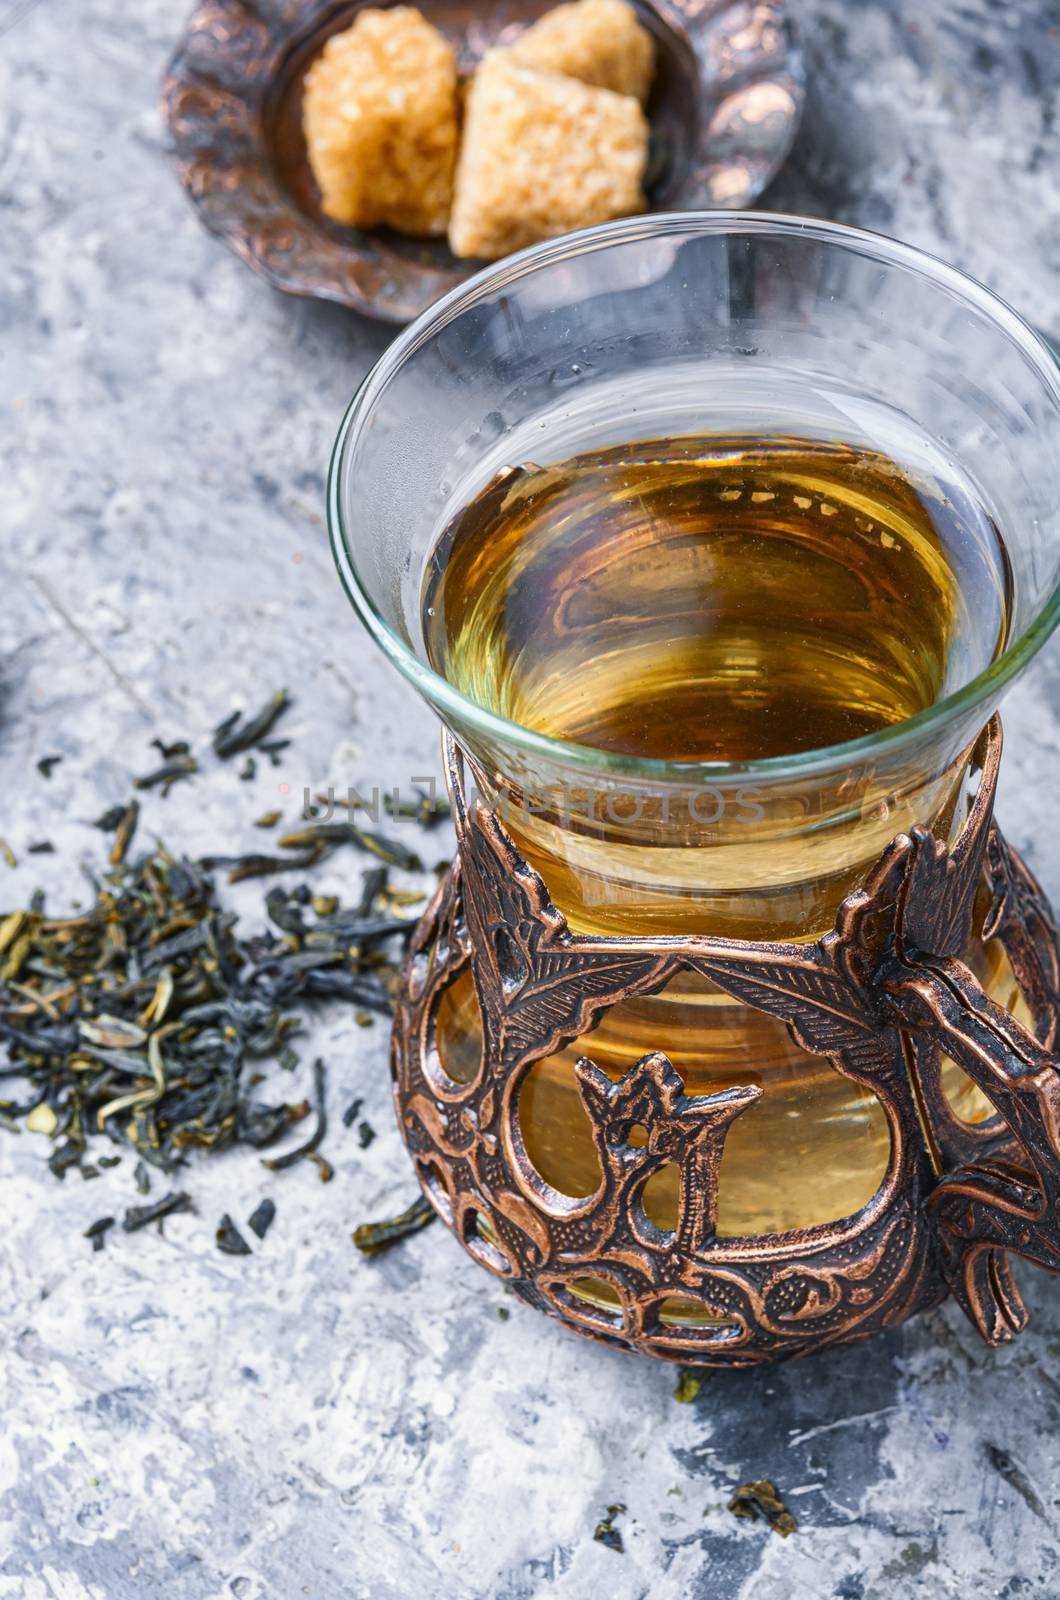 Eastern tea in traditional glasse.Eastern tea concept